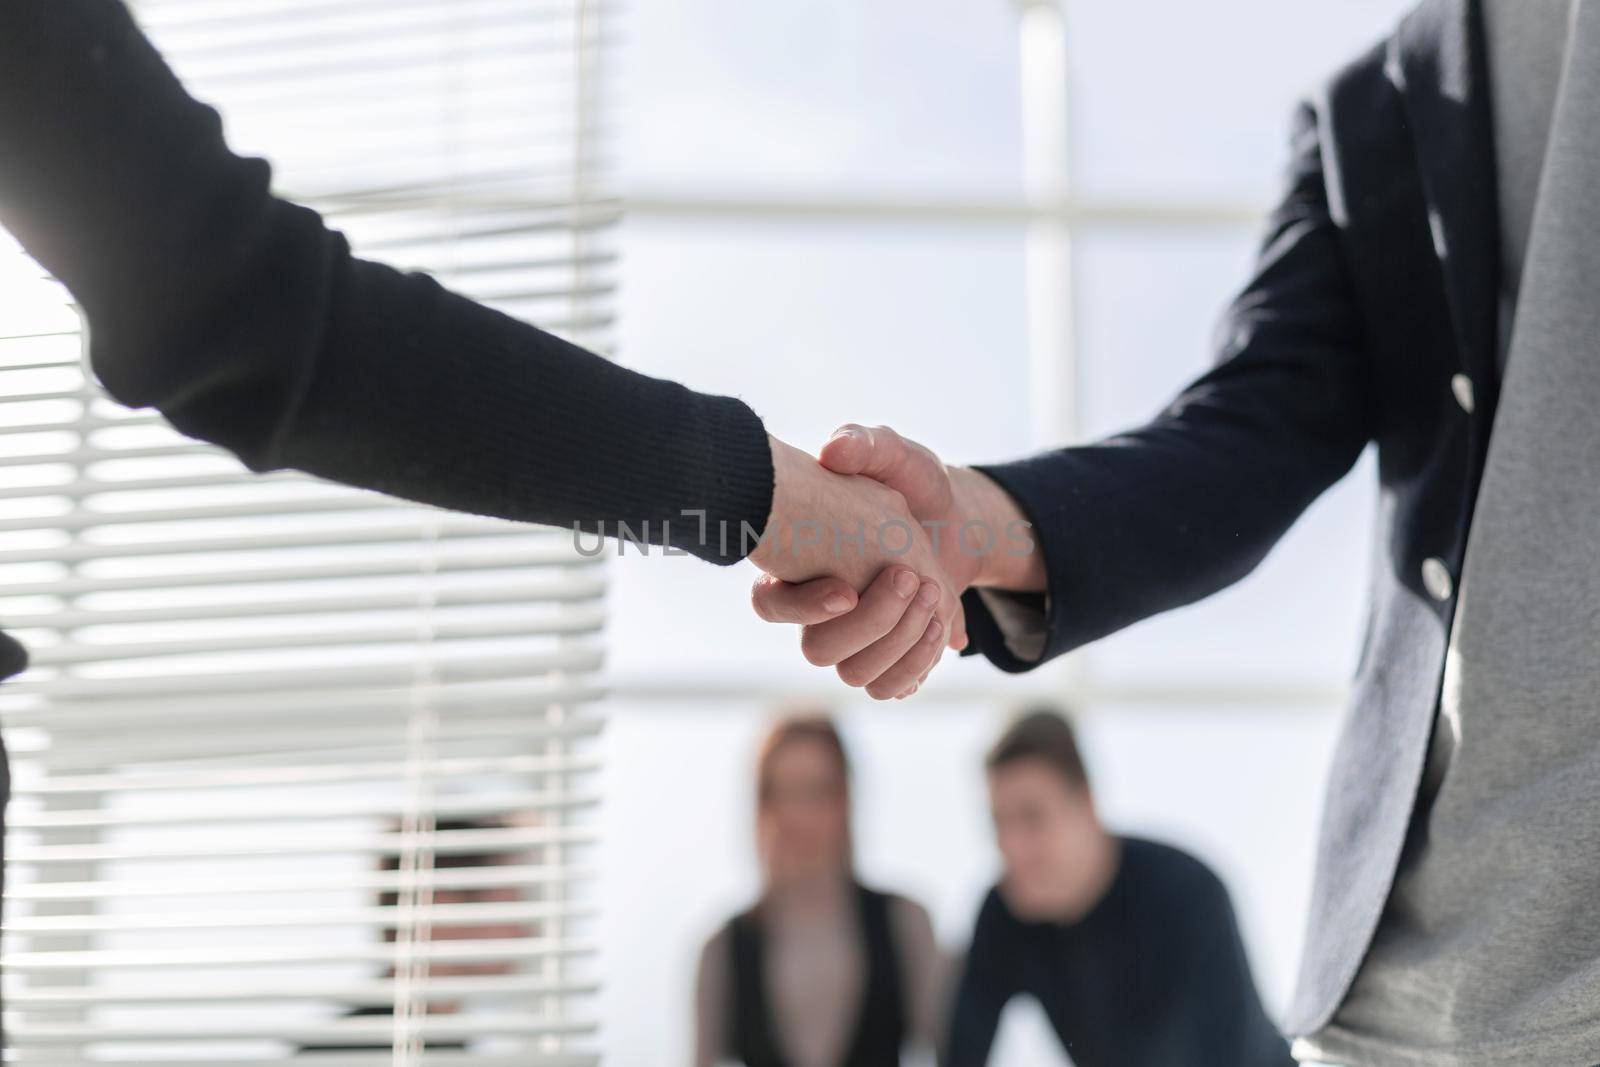 Business partnership meeting concept. Image businessmans handshake. Successful businessmen handshaking after good deal. Horizontal, blurred background